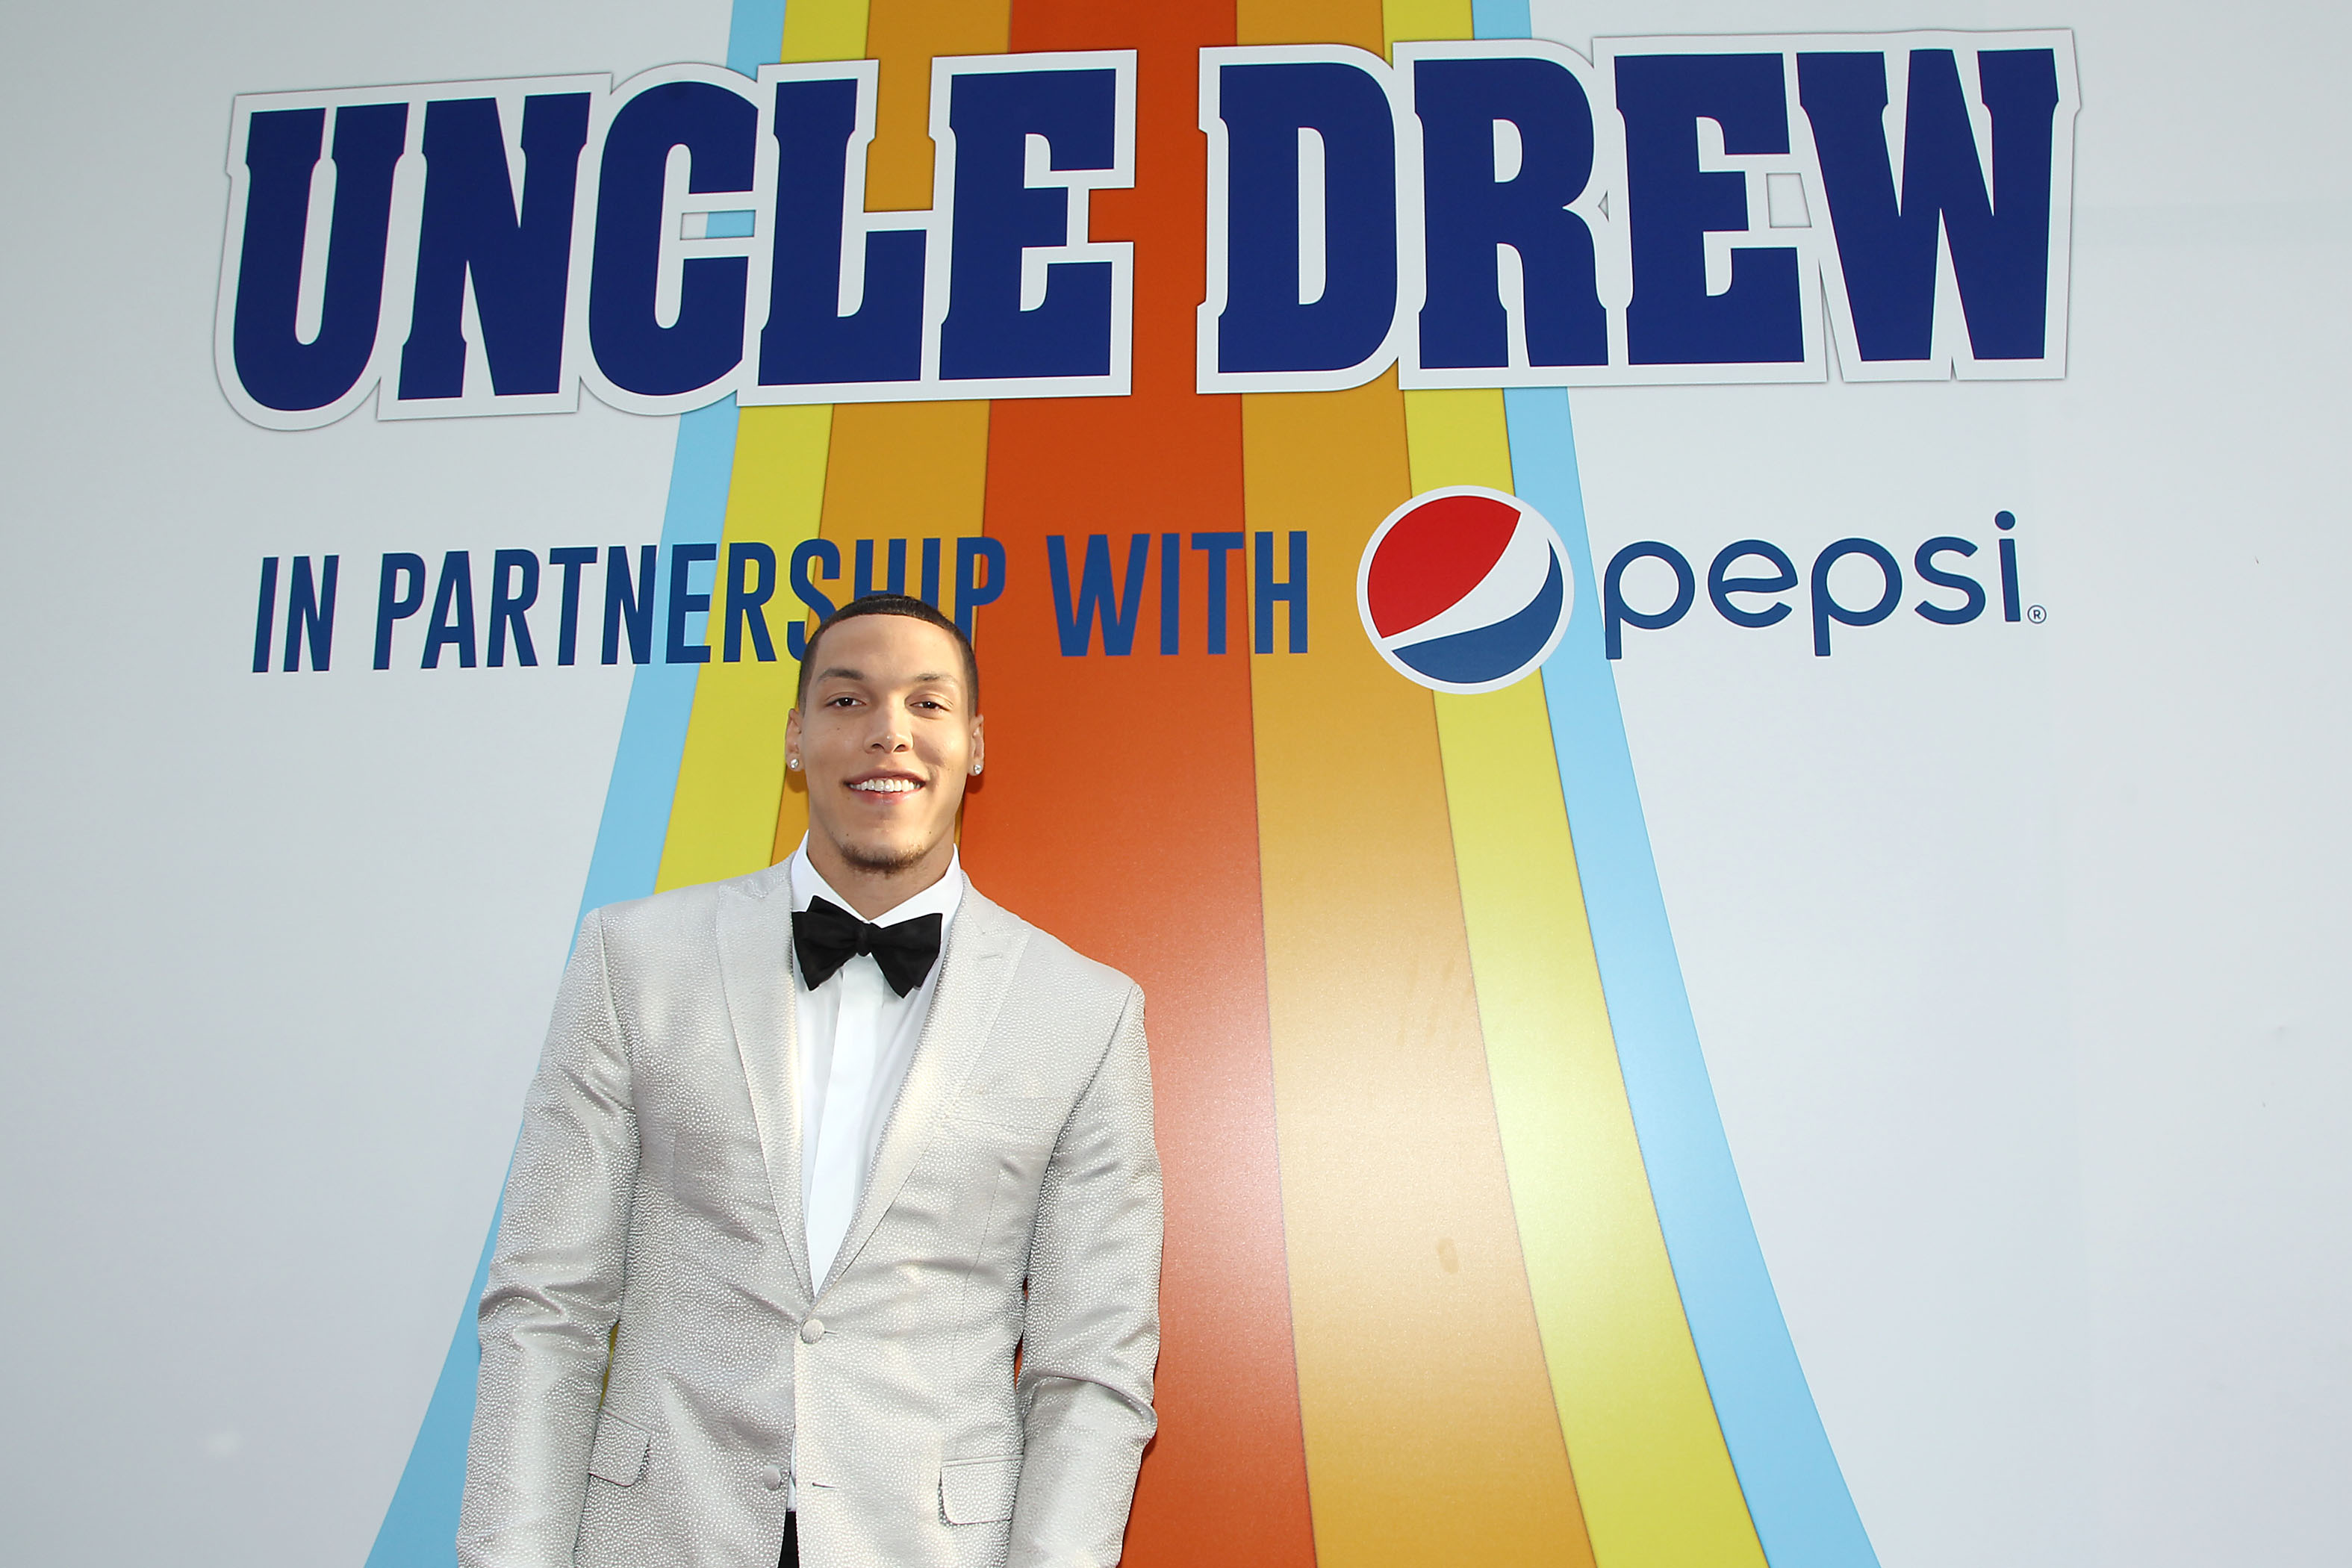 Summit EntertainmentÕs "UNCLE DREW" World Premiere In Partnership with Pepsi